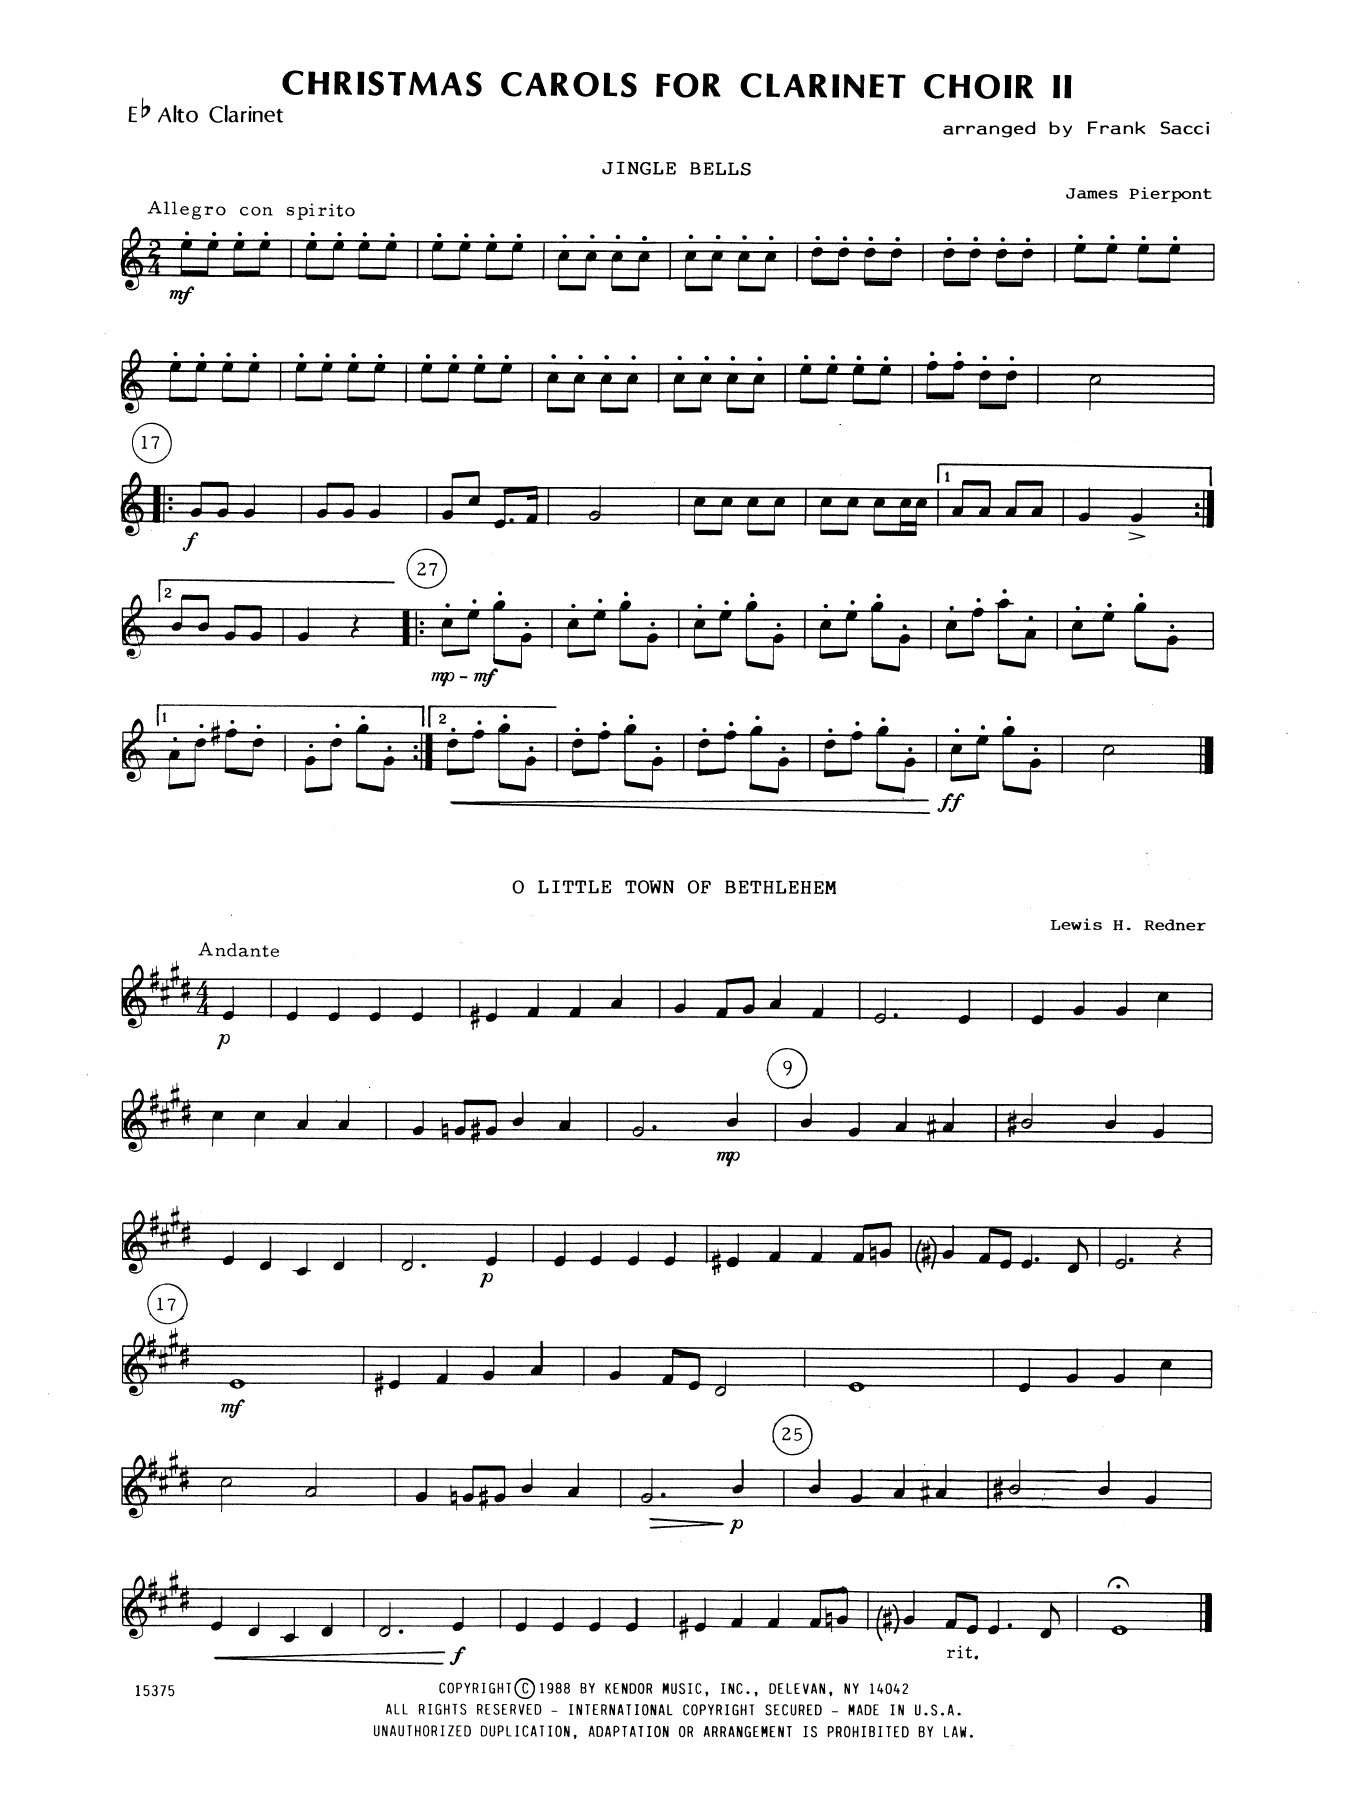 Download Frank J. Sacci Christmas Carols For Clarinet Choir II Sheet Music